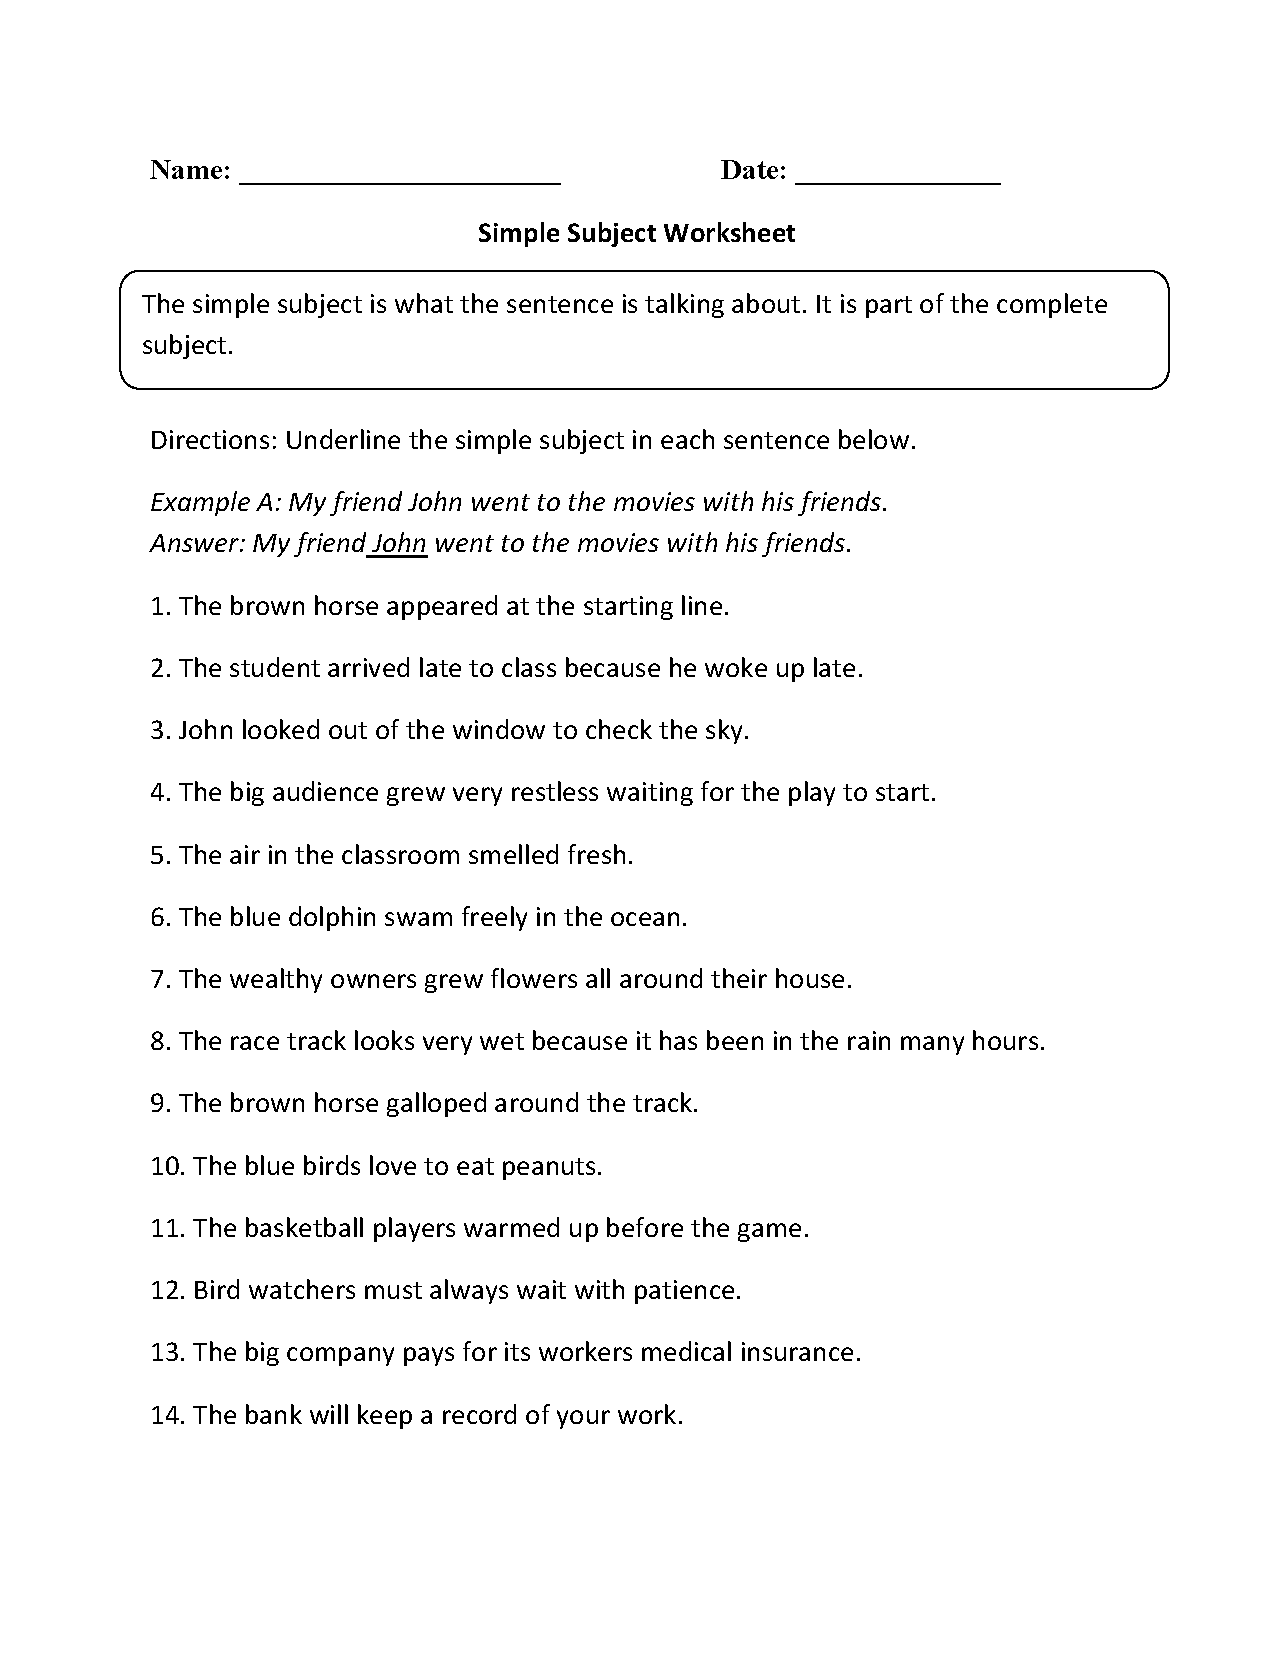 Simple Subject Worksheet